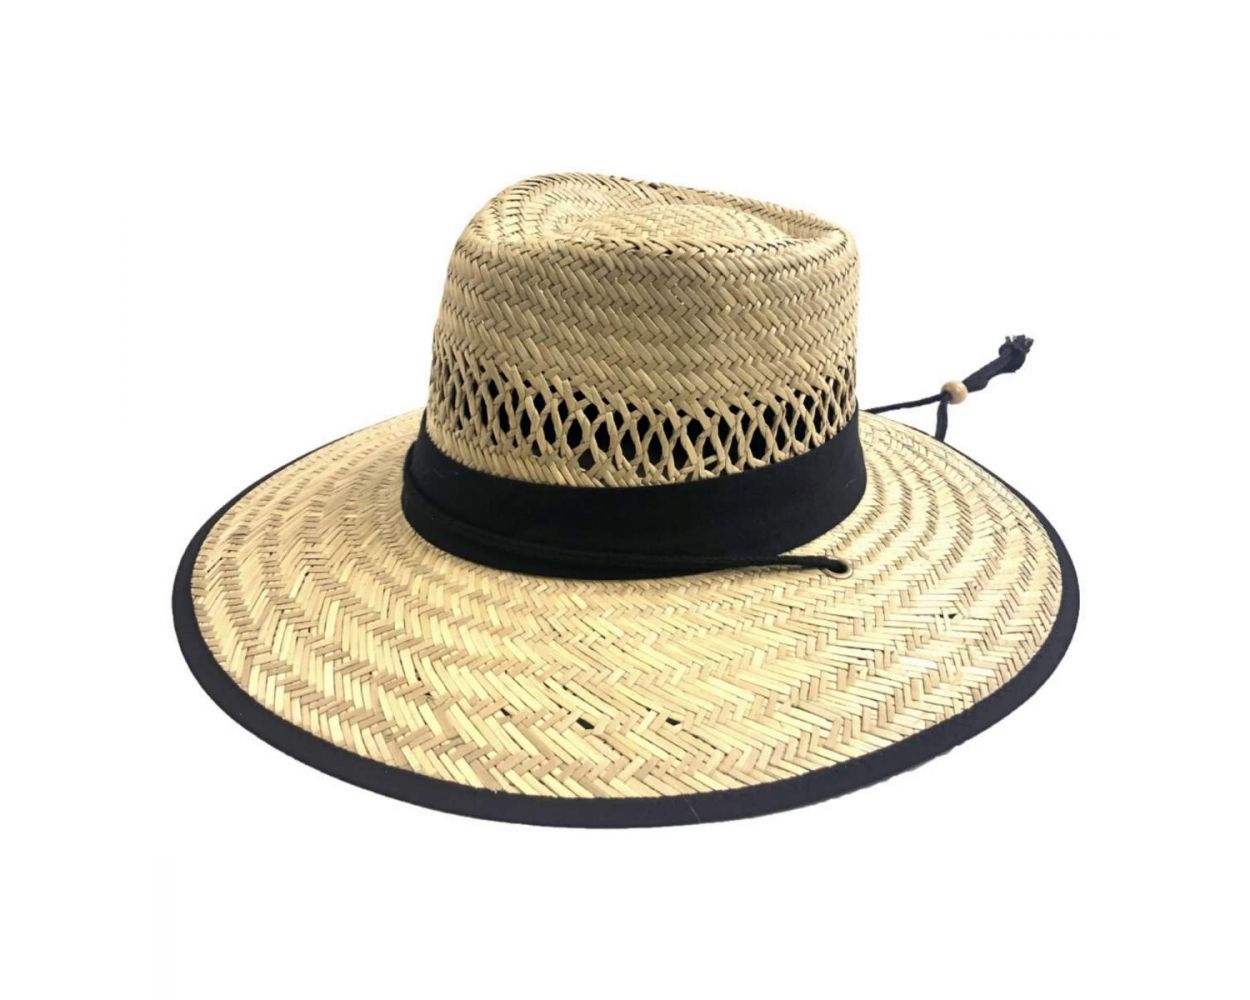 Backspin Men's Rush Straw Lifeguard Hat